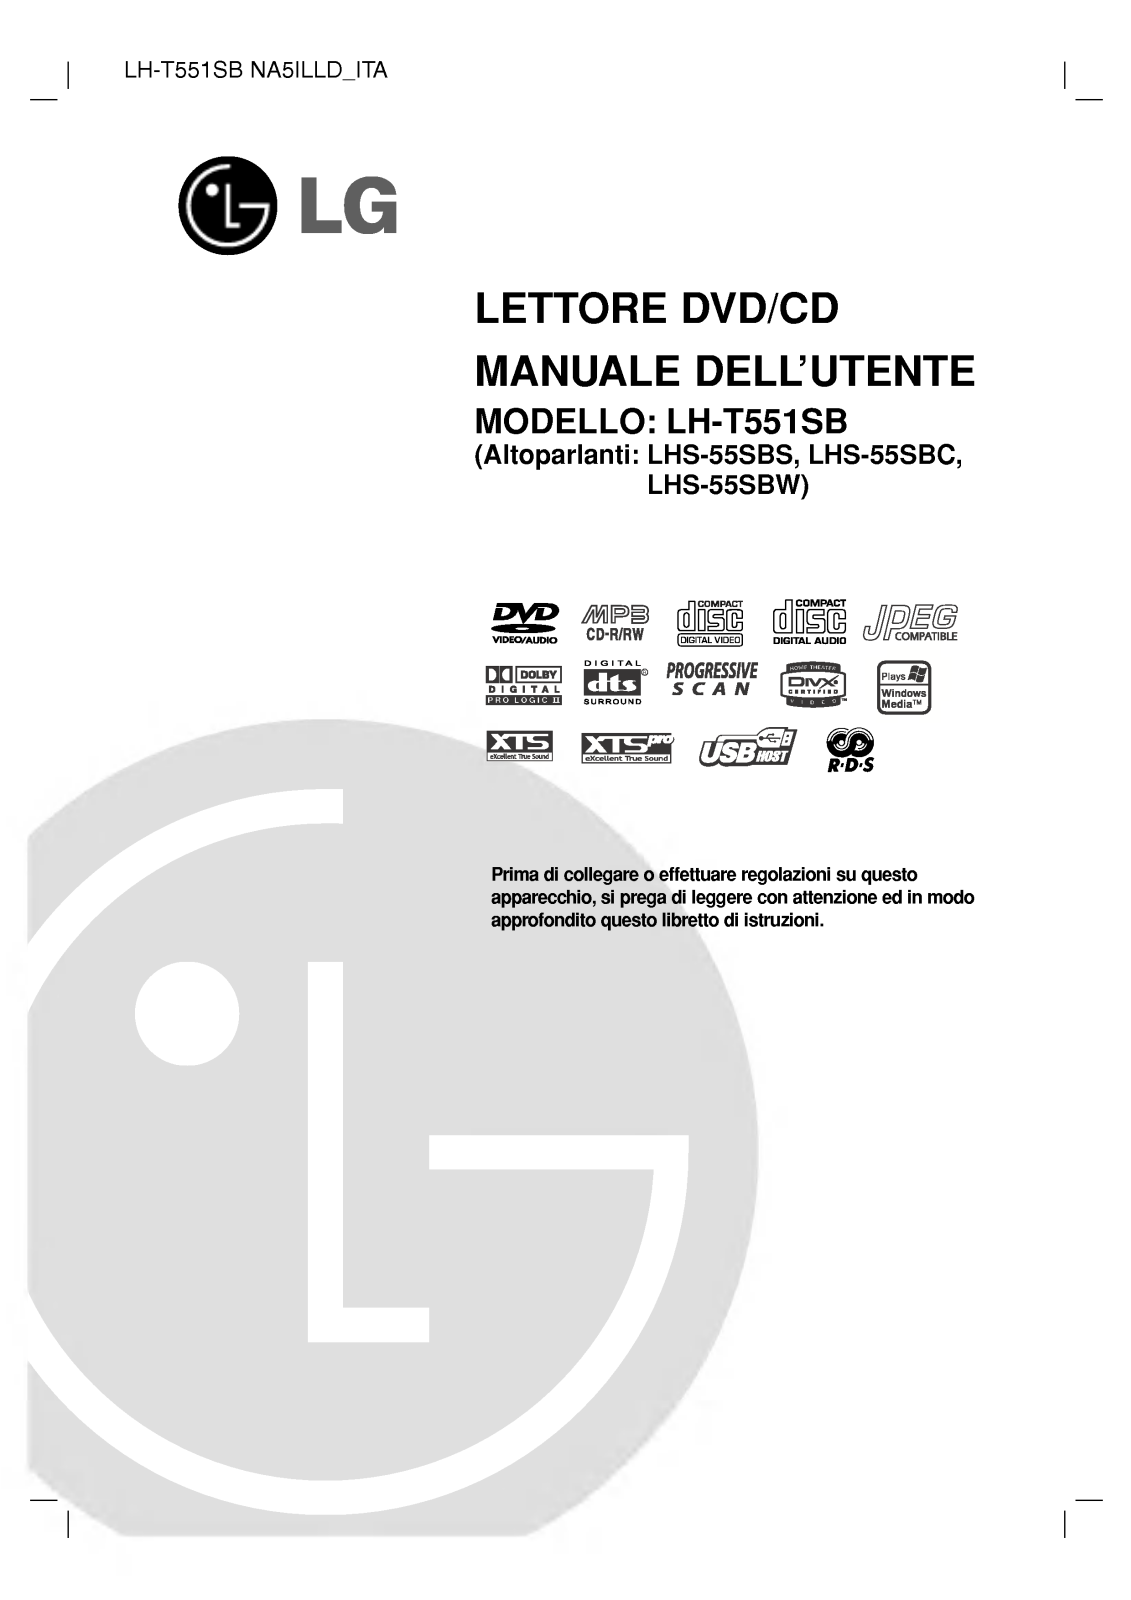 LG LH-T551SB User Manual